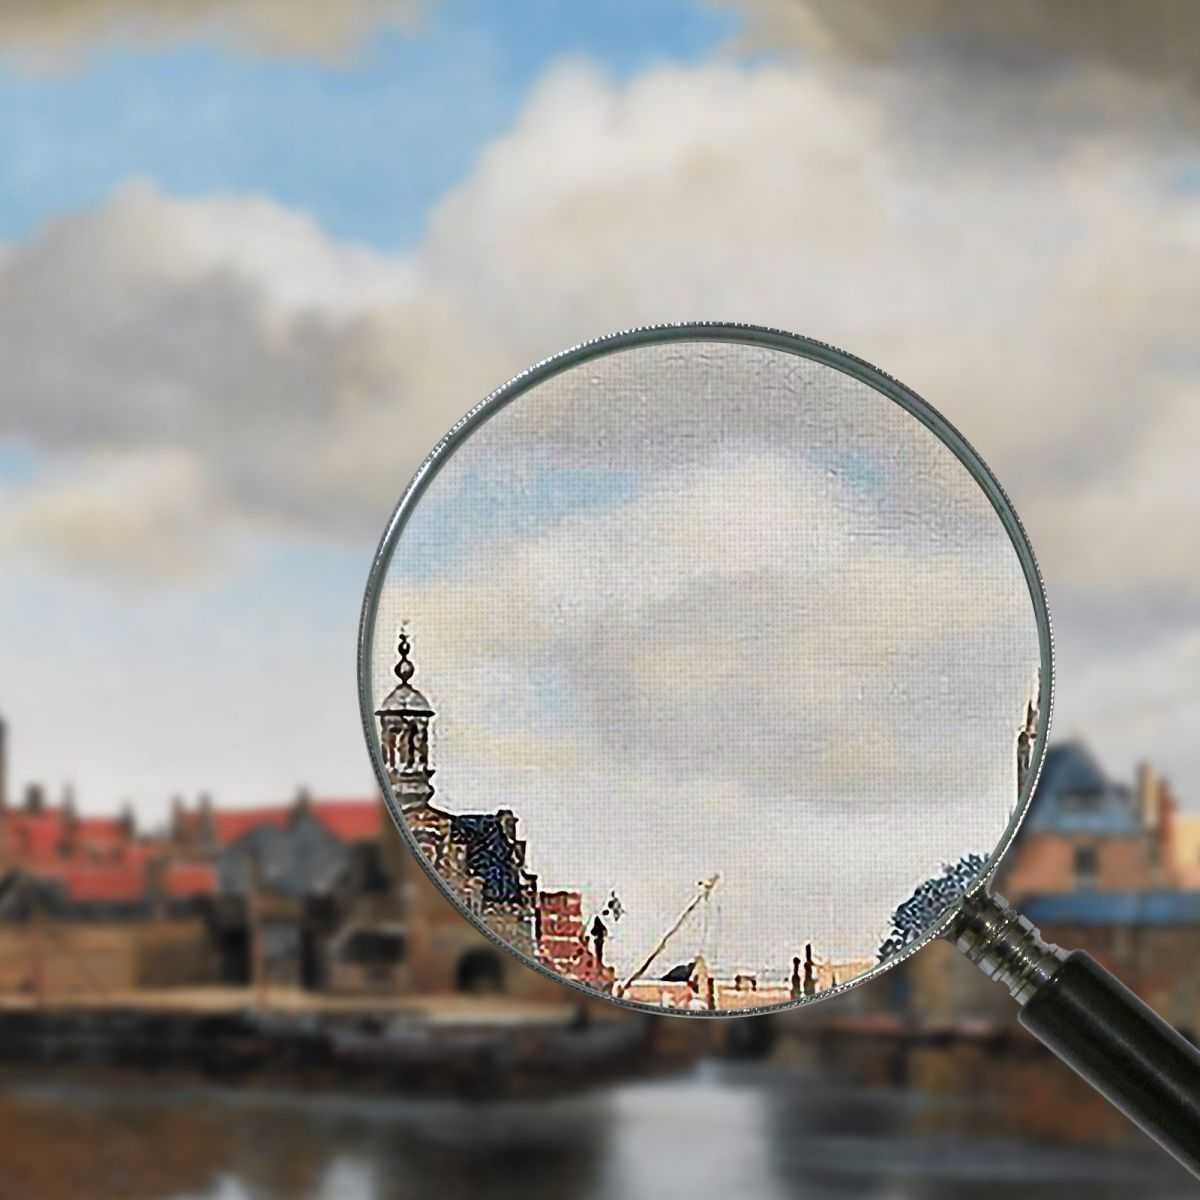 Veduta Di Delft Vermeer Jan quadro stampa su tela JV31